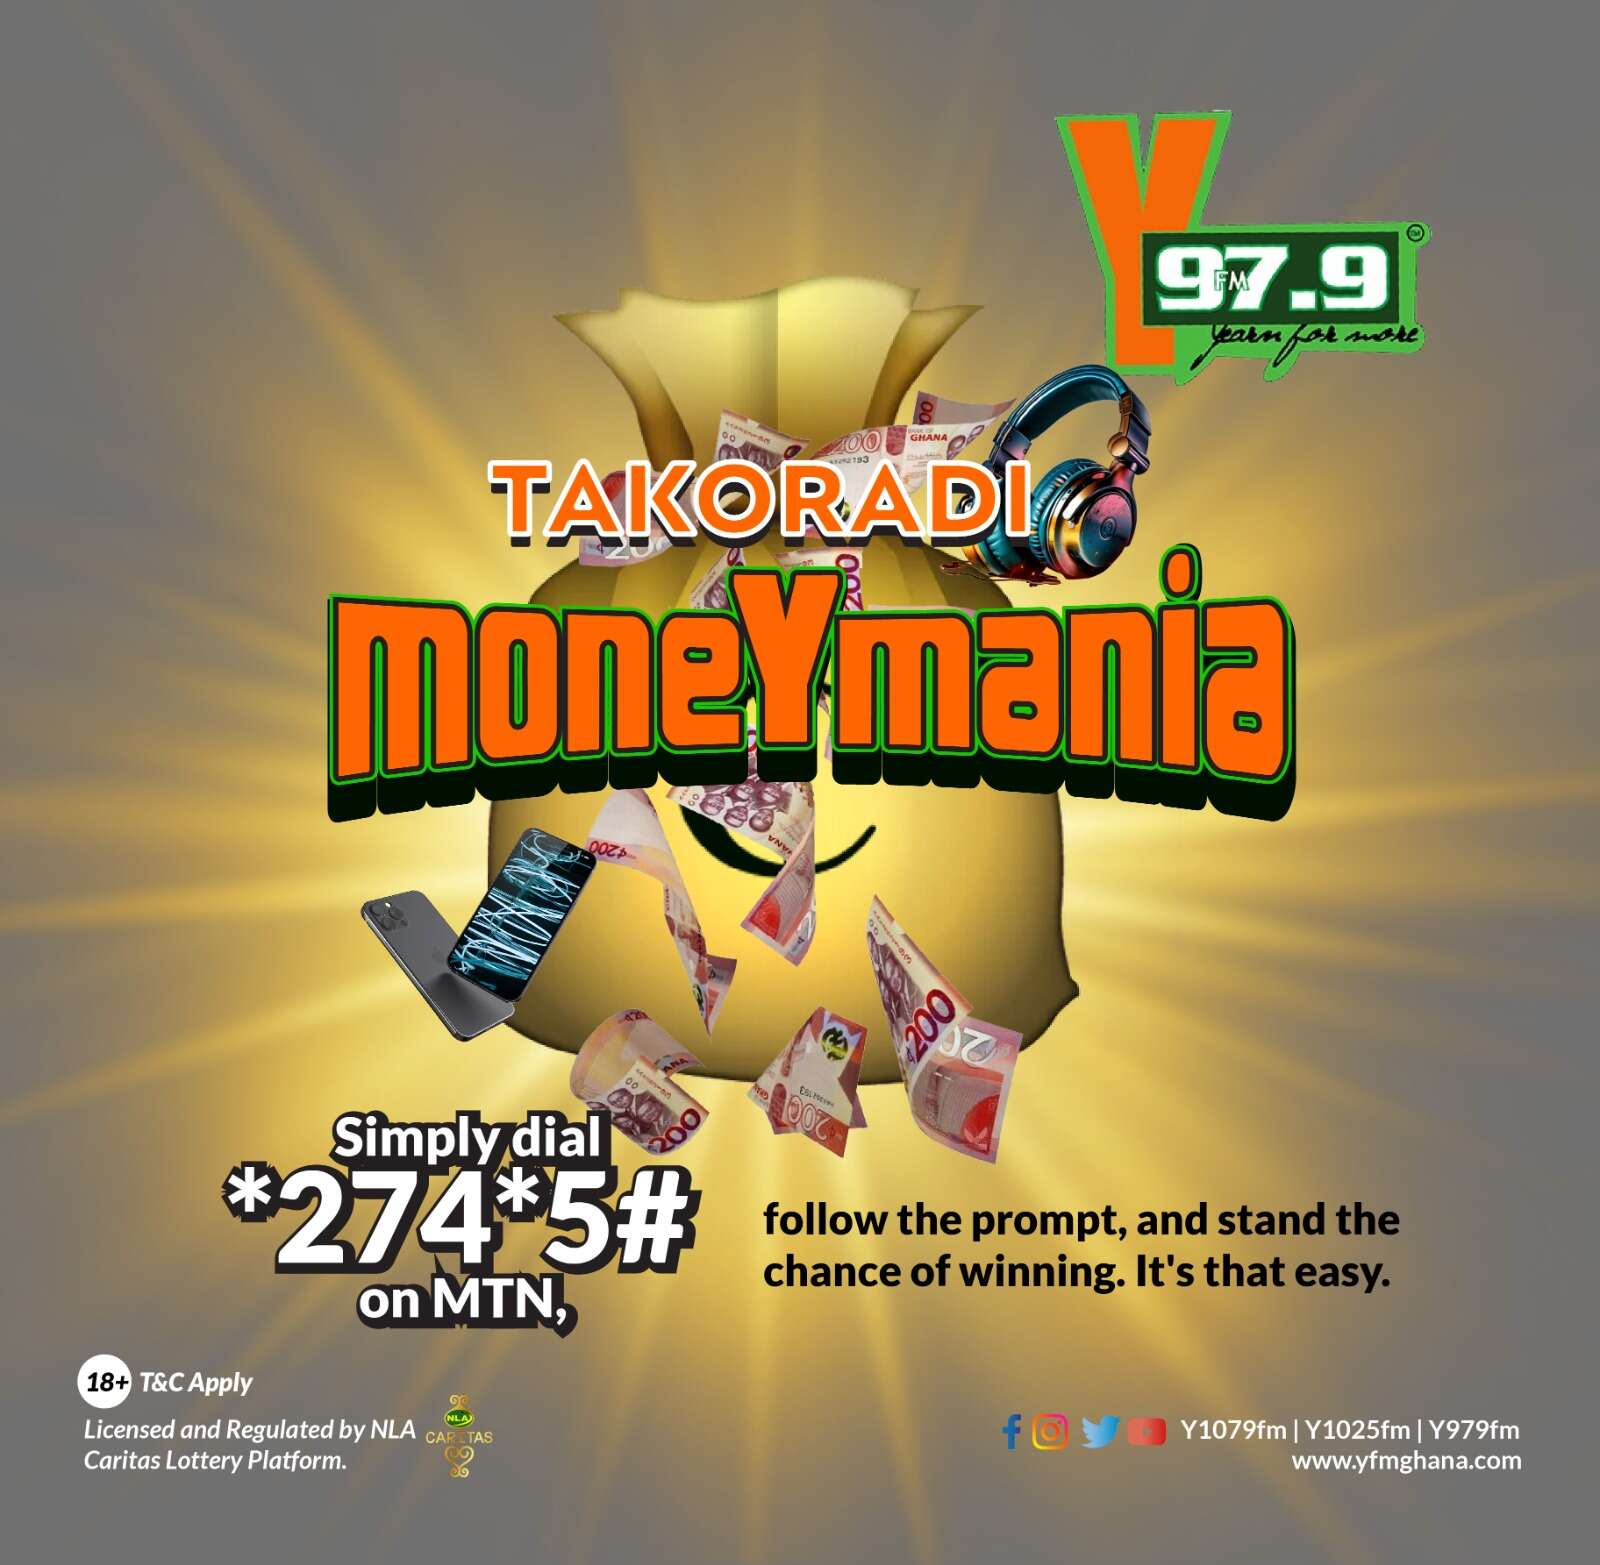 YFM launches MoneyMania, set to reward listeners with 20,000 cedis weekly